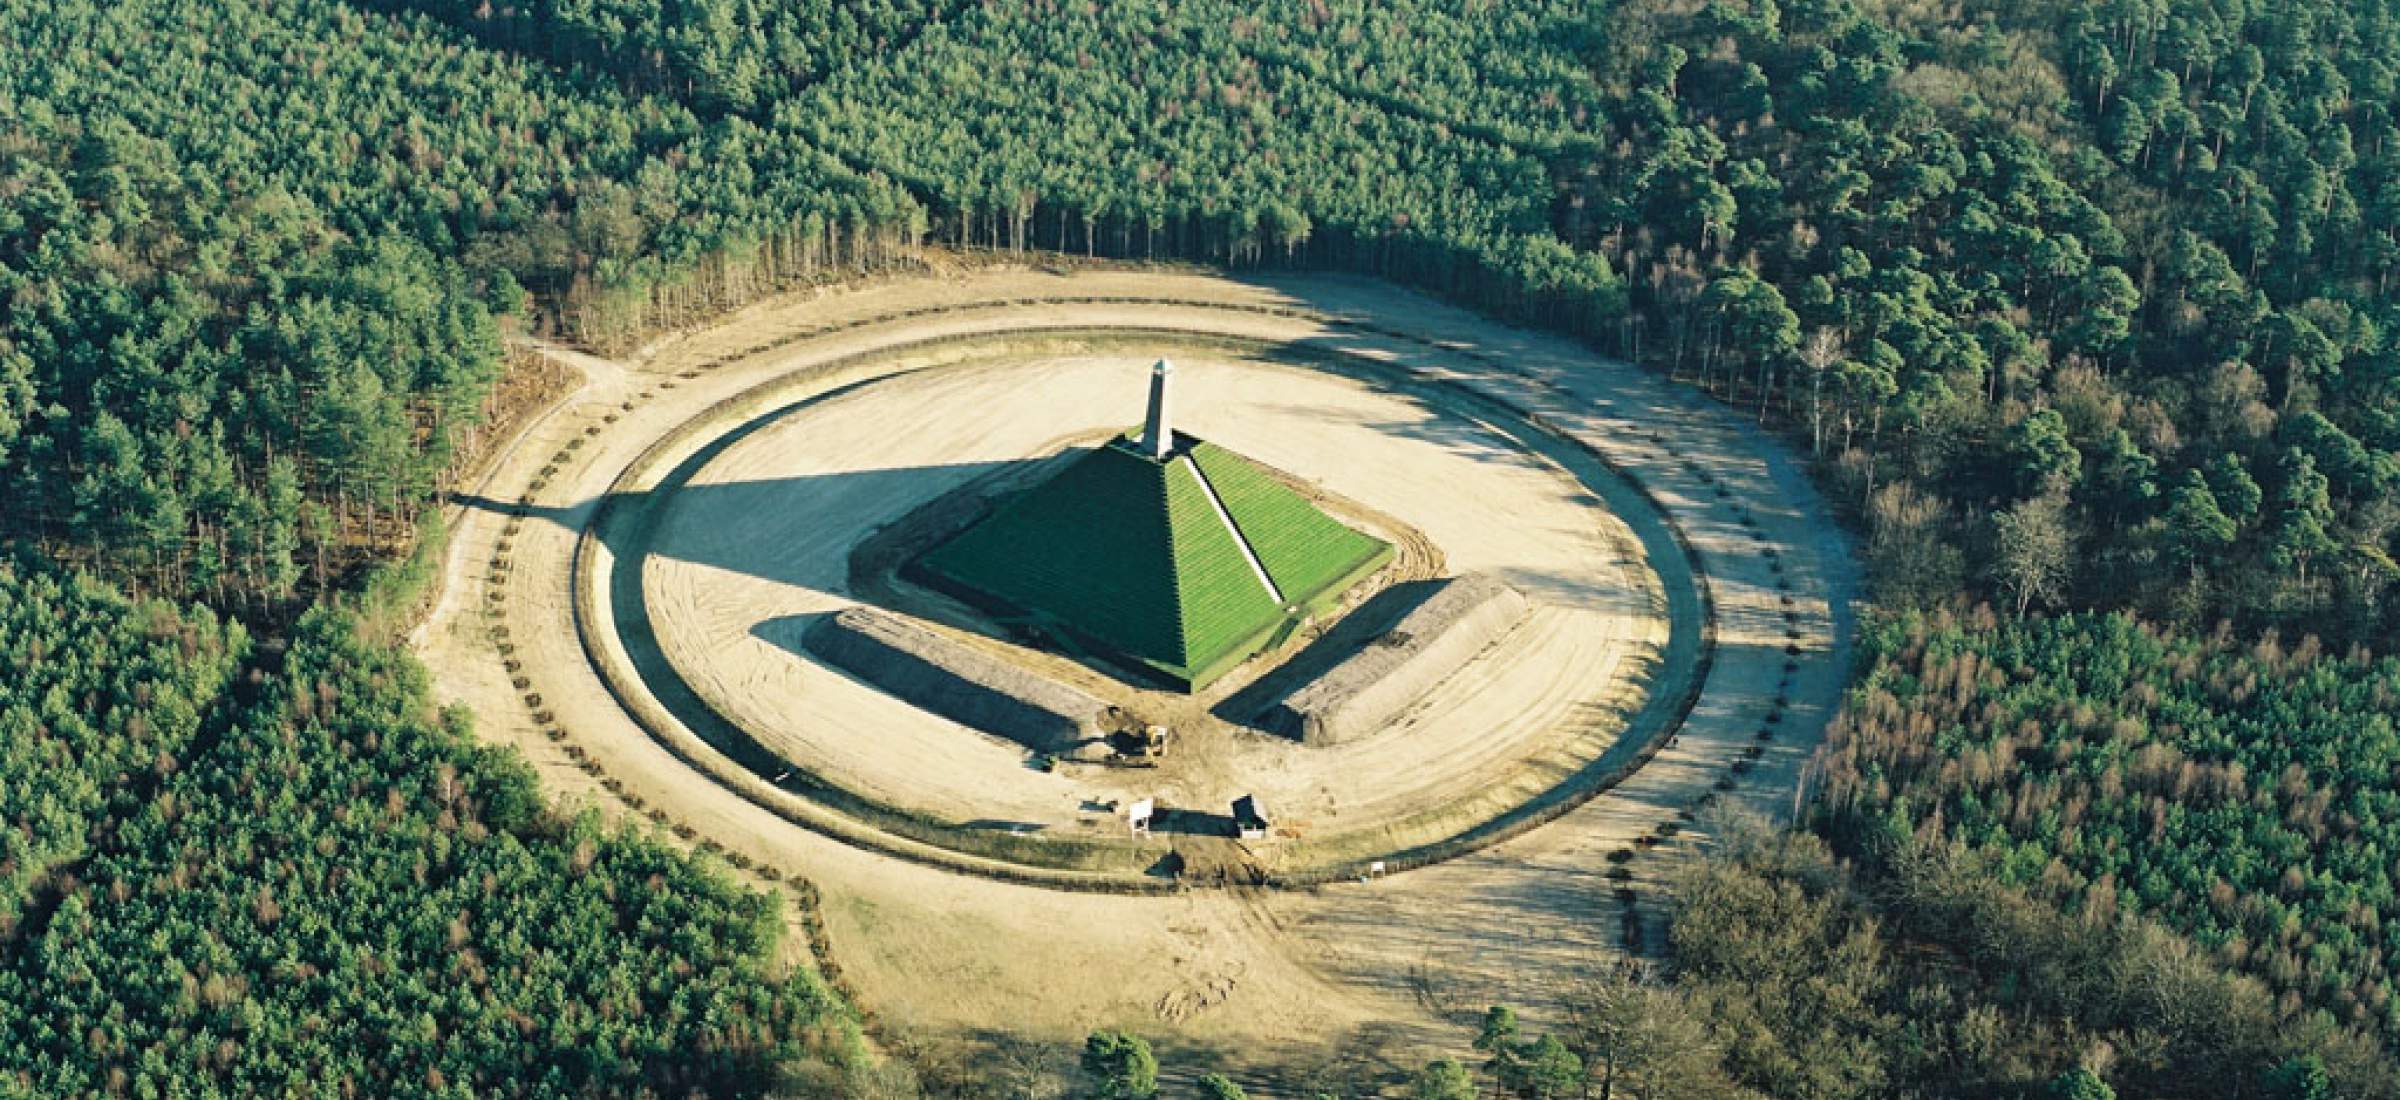 LANDLAB-Pyramide Austerlitz (2)